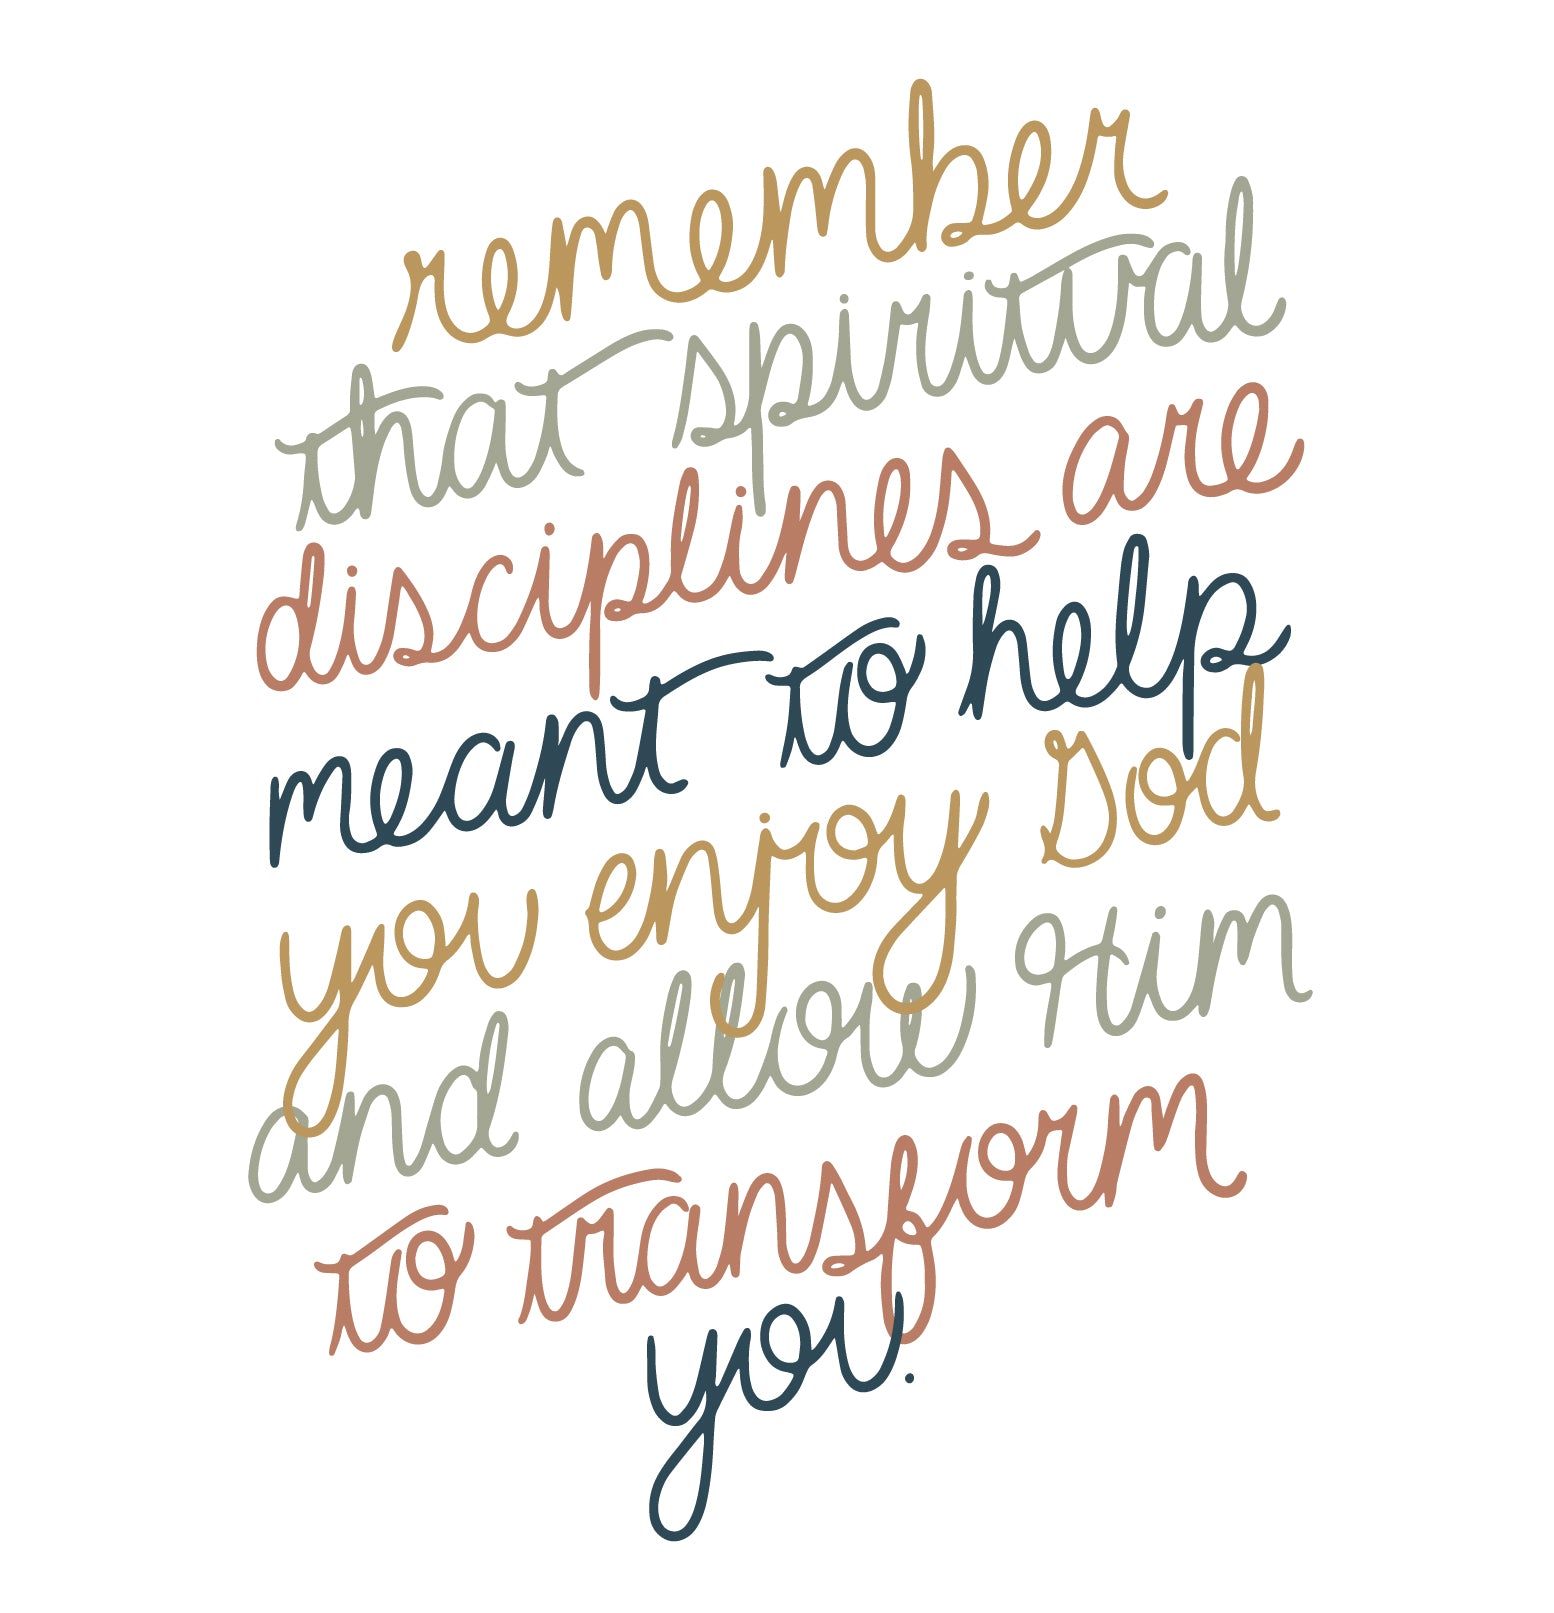 Spiritual disciplines are meant to help you enjoy God | TDGC